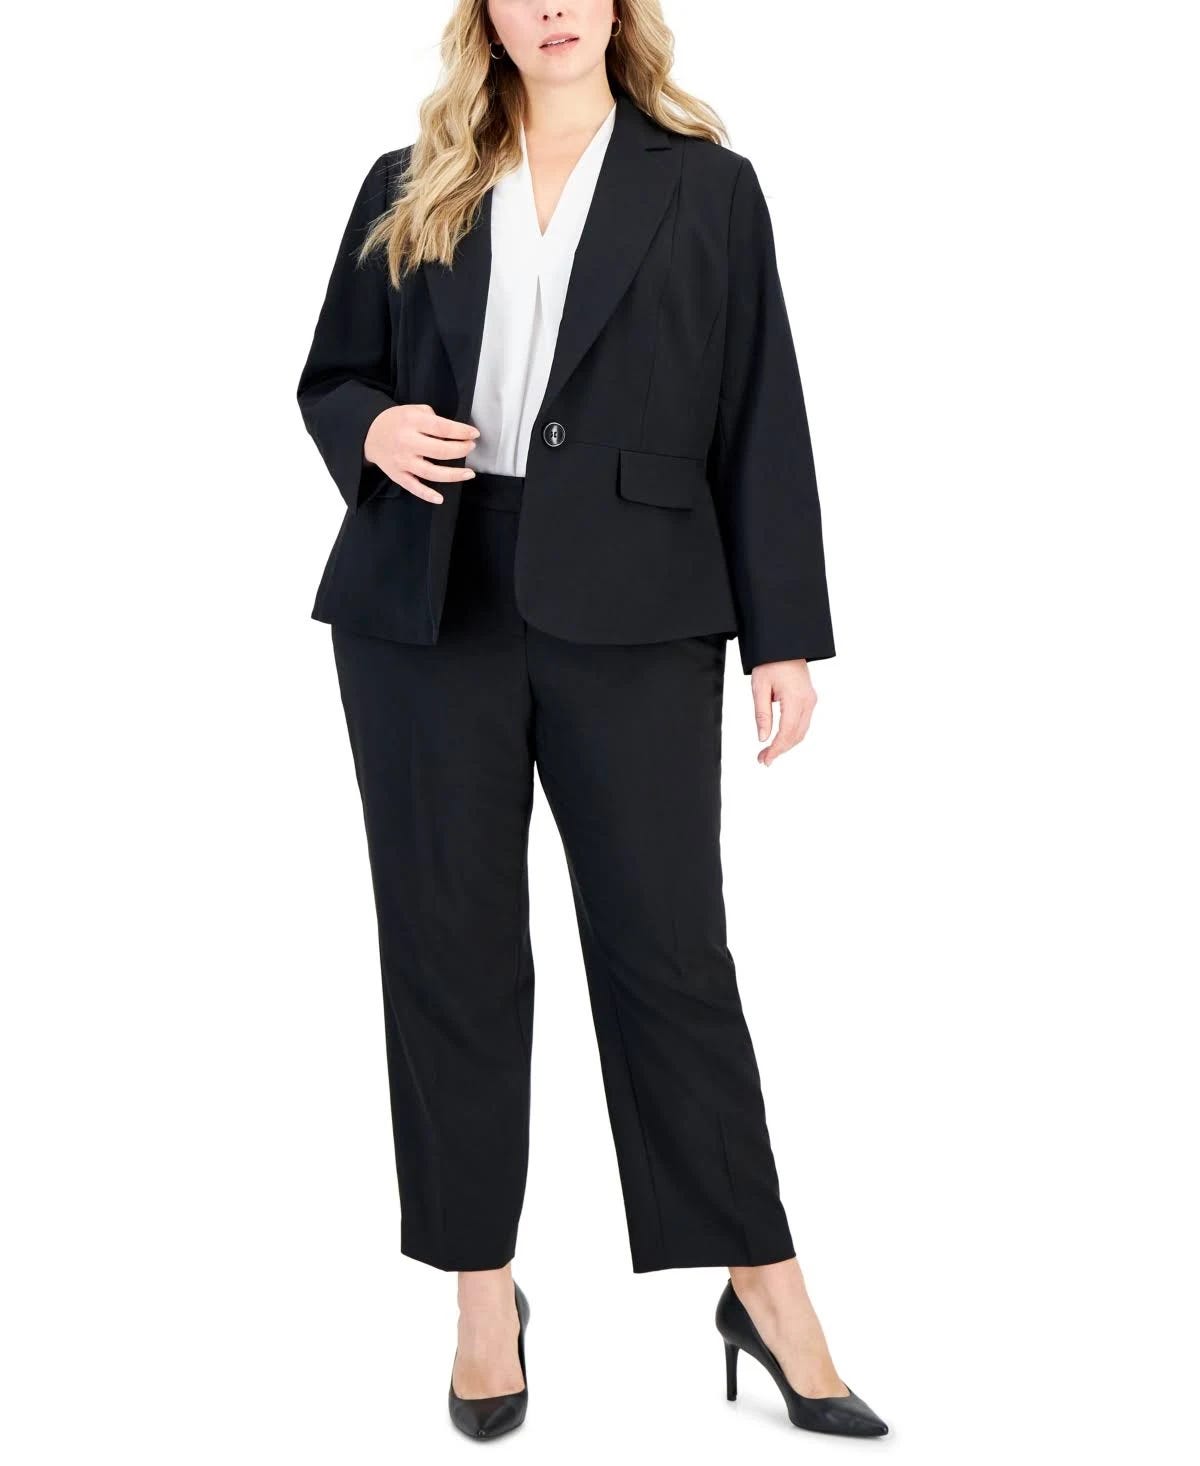 Black Plus Size Polyester Pant Suit with Zipper Closure | Image